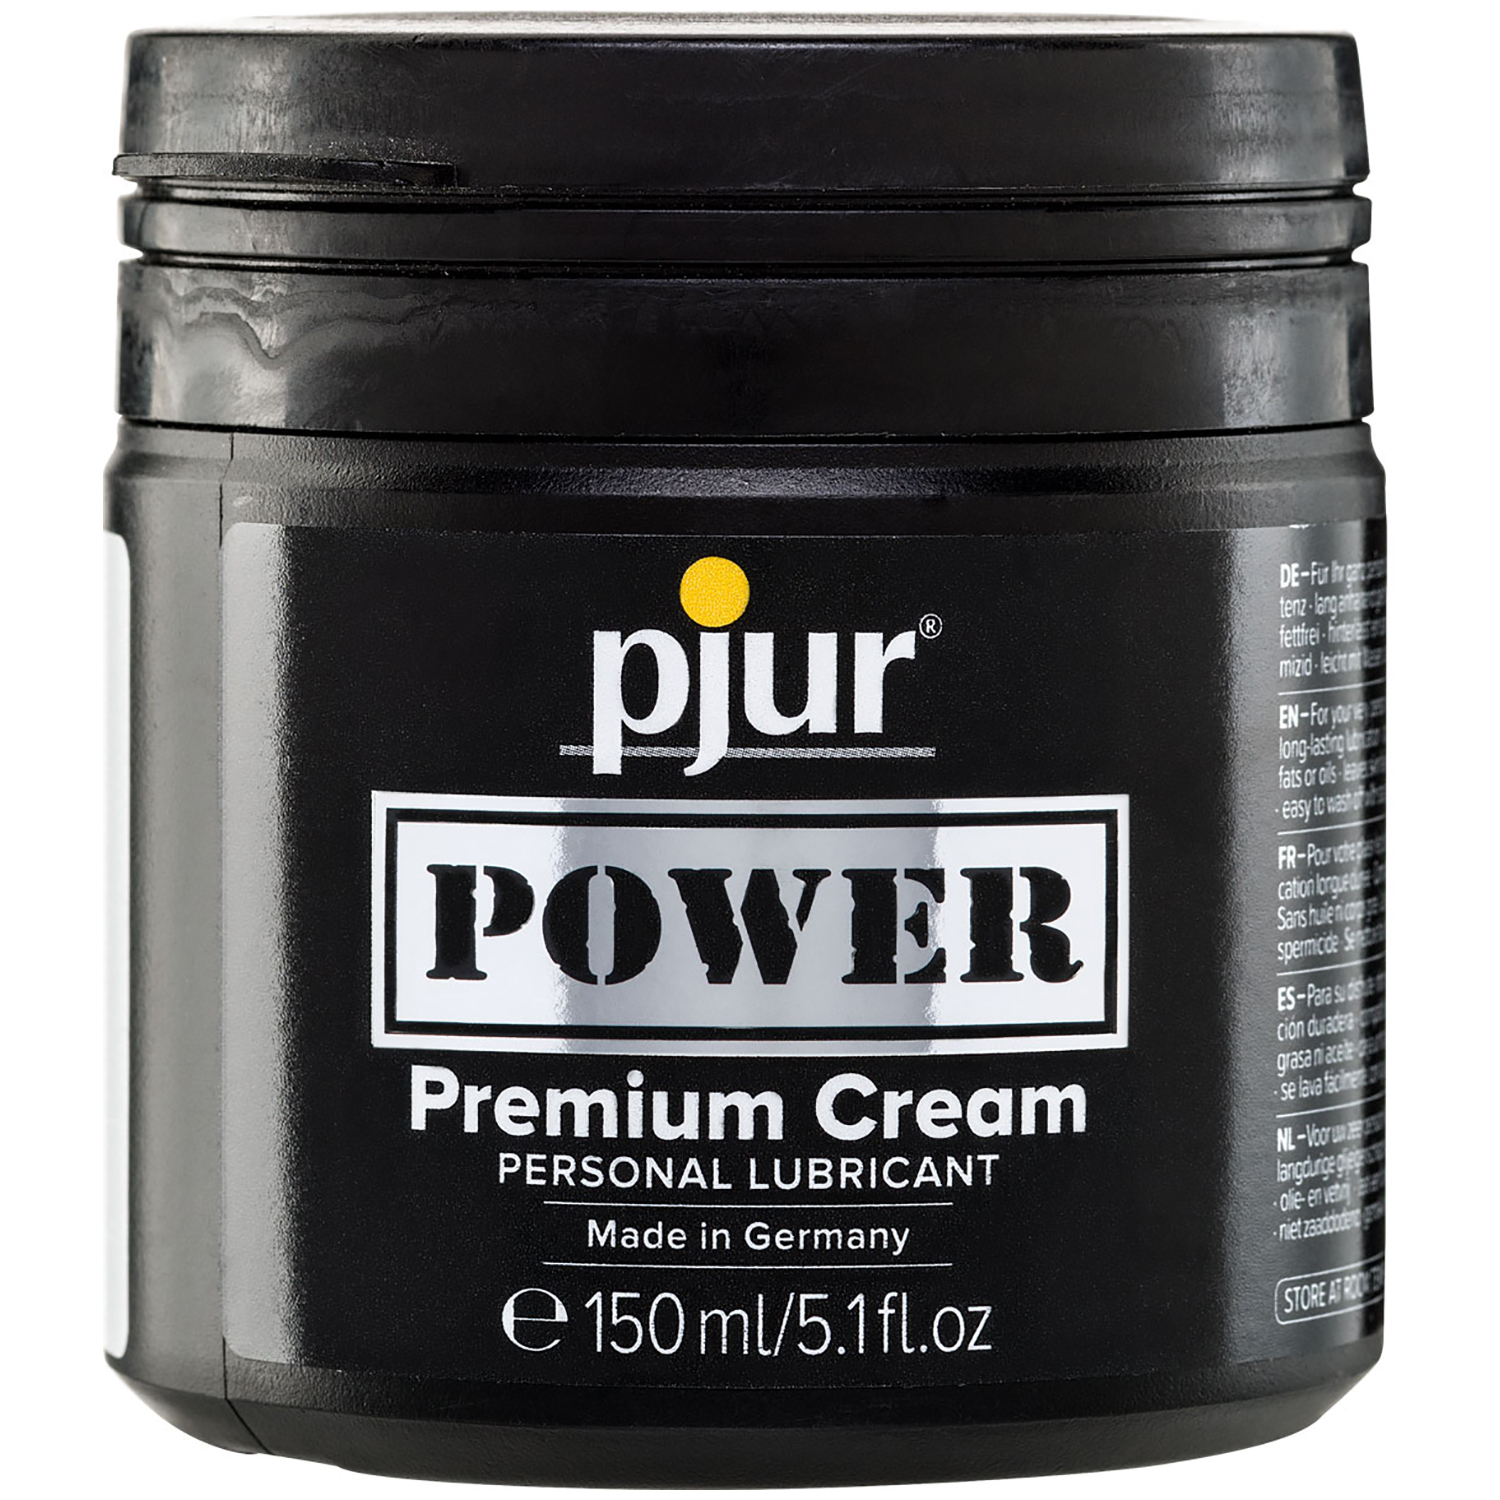 Pjur Power Creme Glidecreme 150 ml     - Klar thumbnail